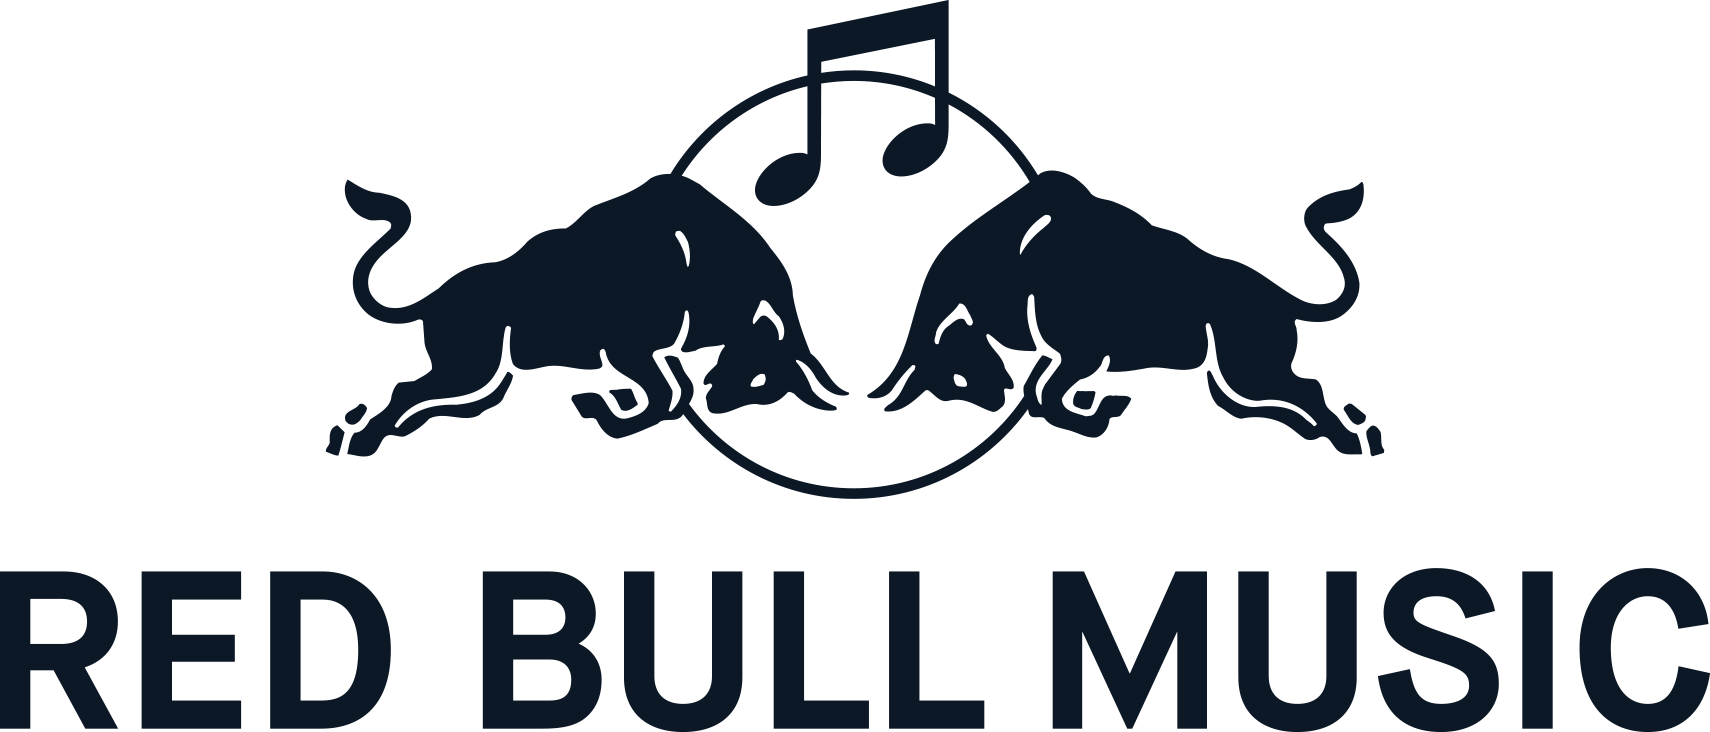 Red Bull Can Logo - Multi Platform Media Company. Red Bull Media House